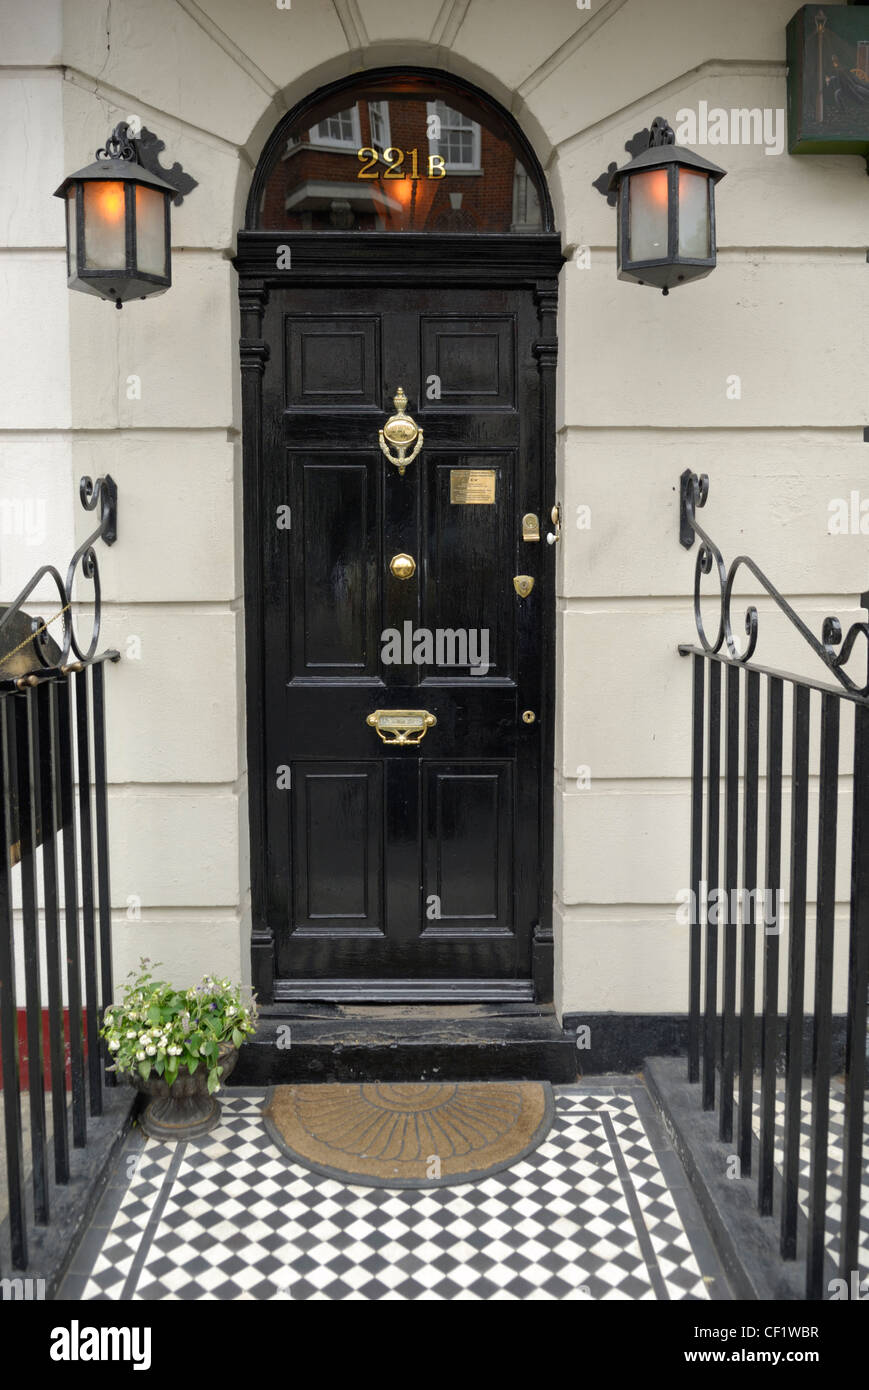 Doorway of 221B Baker Street, fictional residence of Sherlock Holmes, now part of the Sherlock Holmes museum. Stock Photo